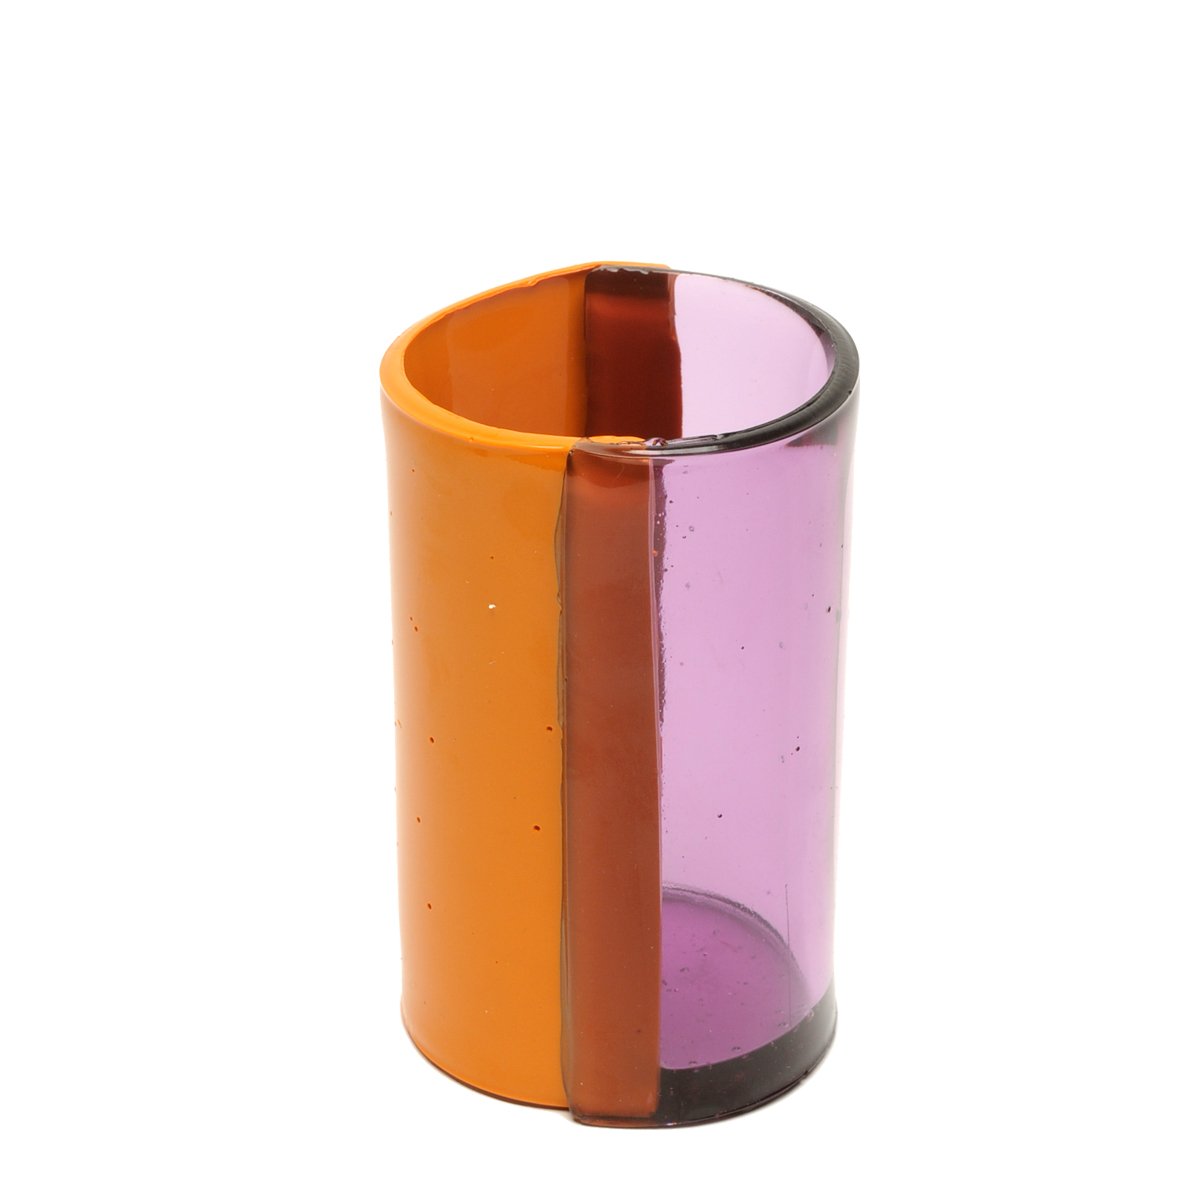 Enzo Mari Soft Resin Vase Small - Orange and Purple